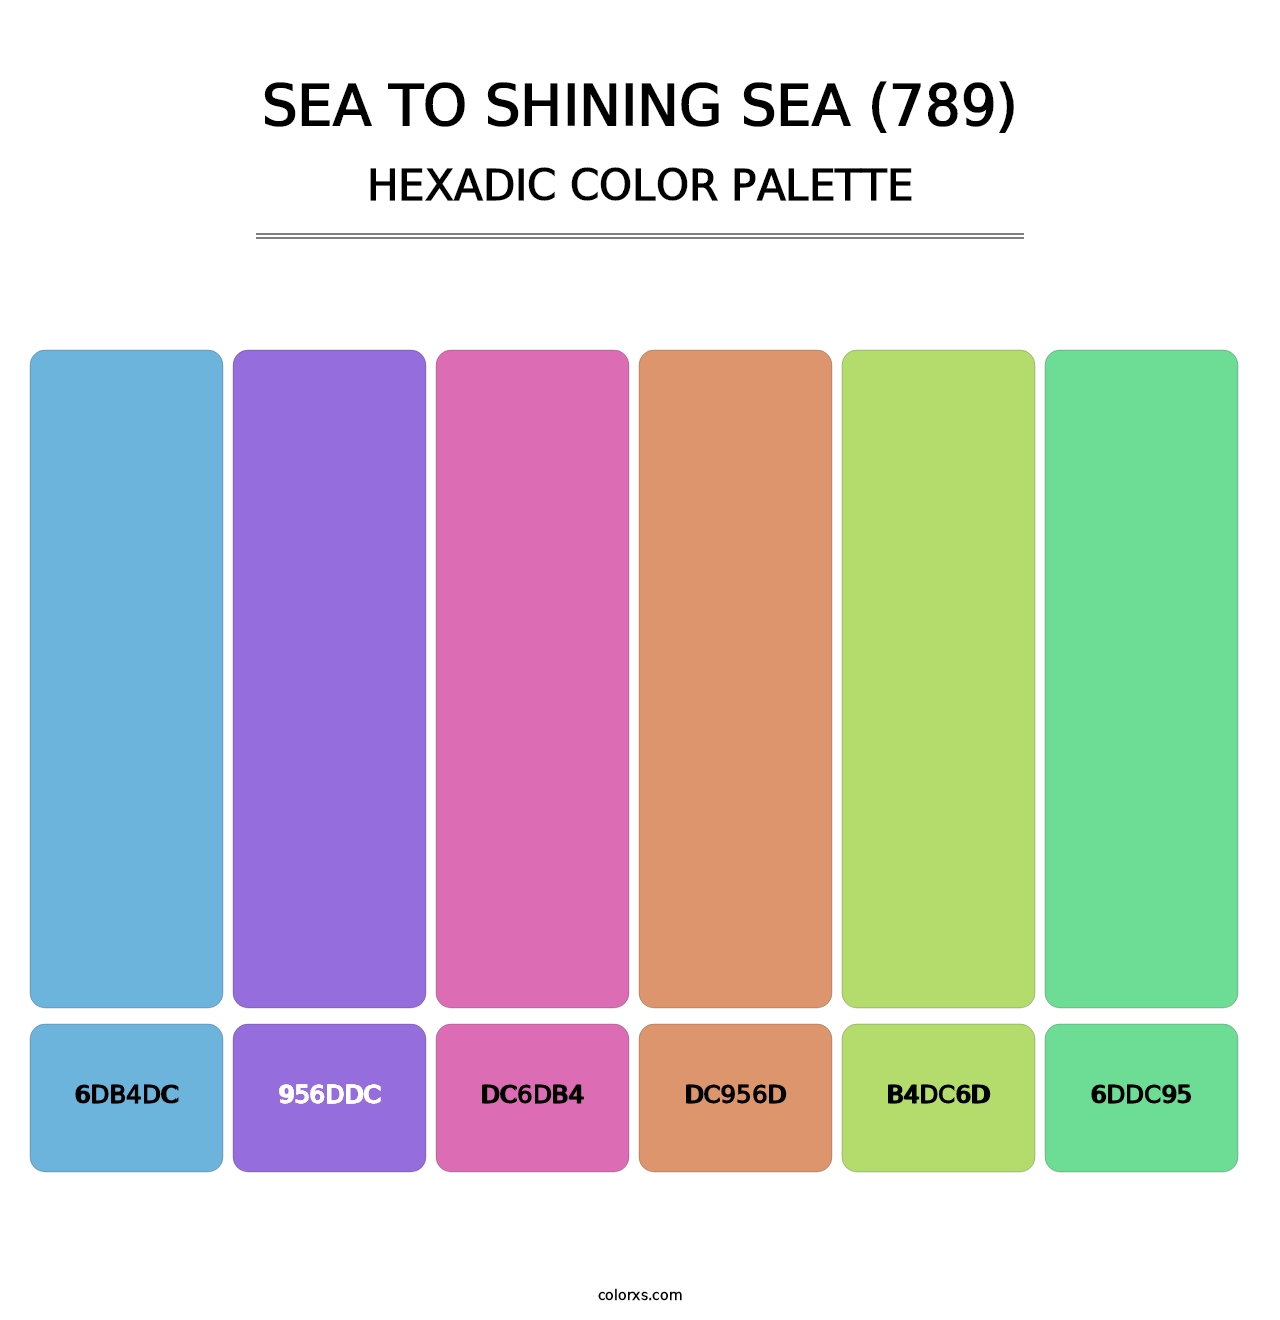 Sea to Shining Sea (789) - Hexadic Color Palette